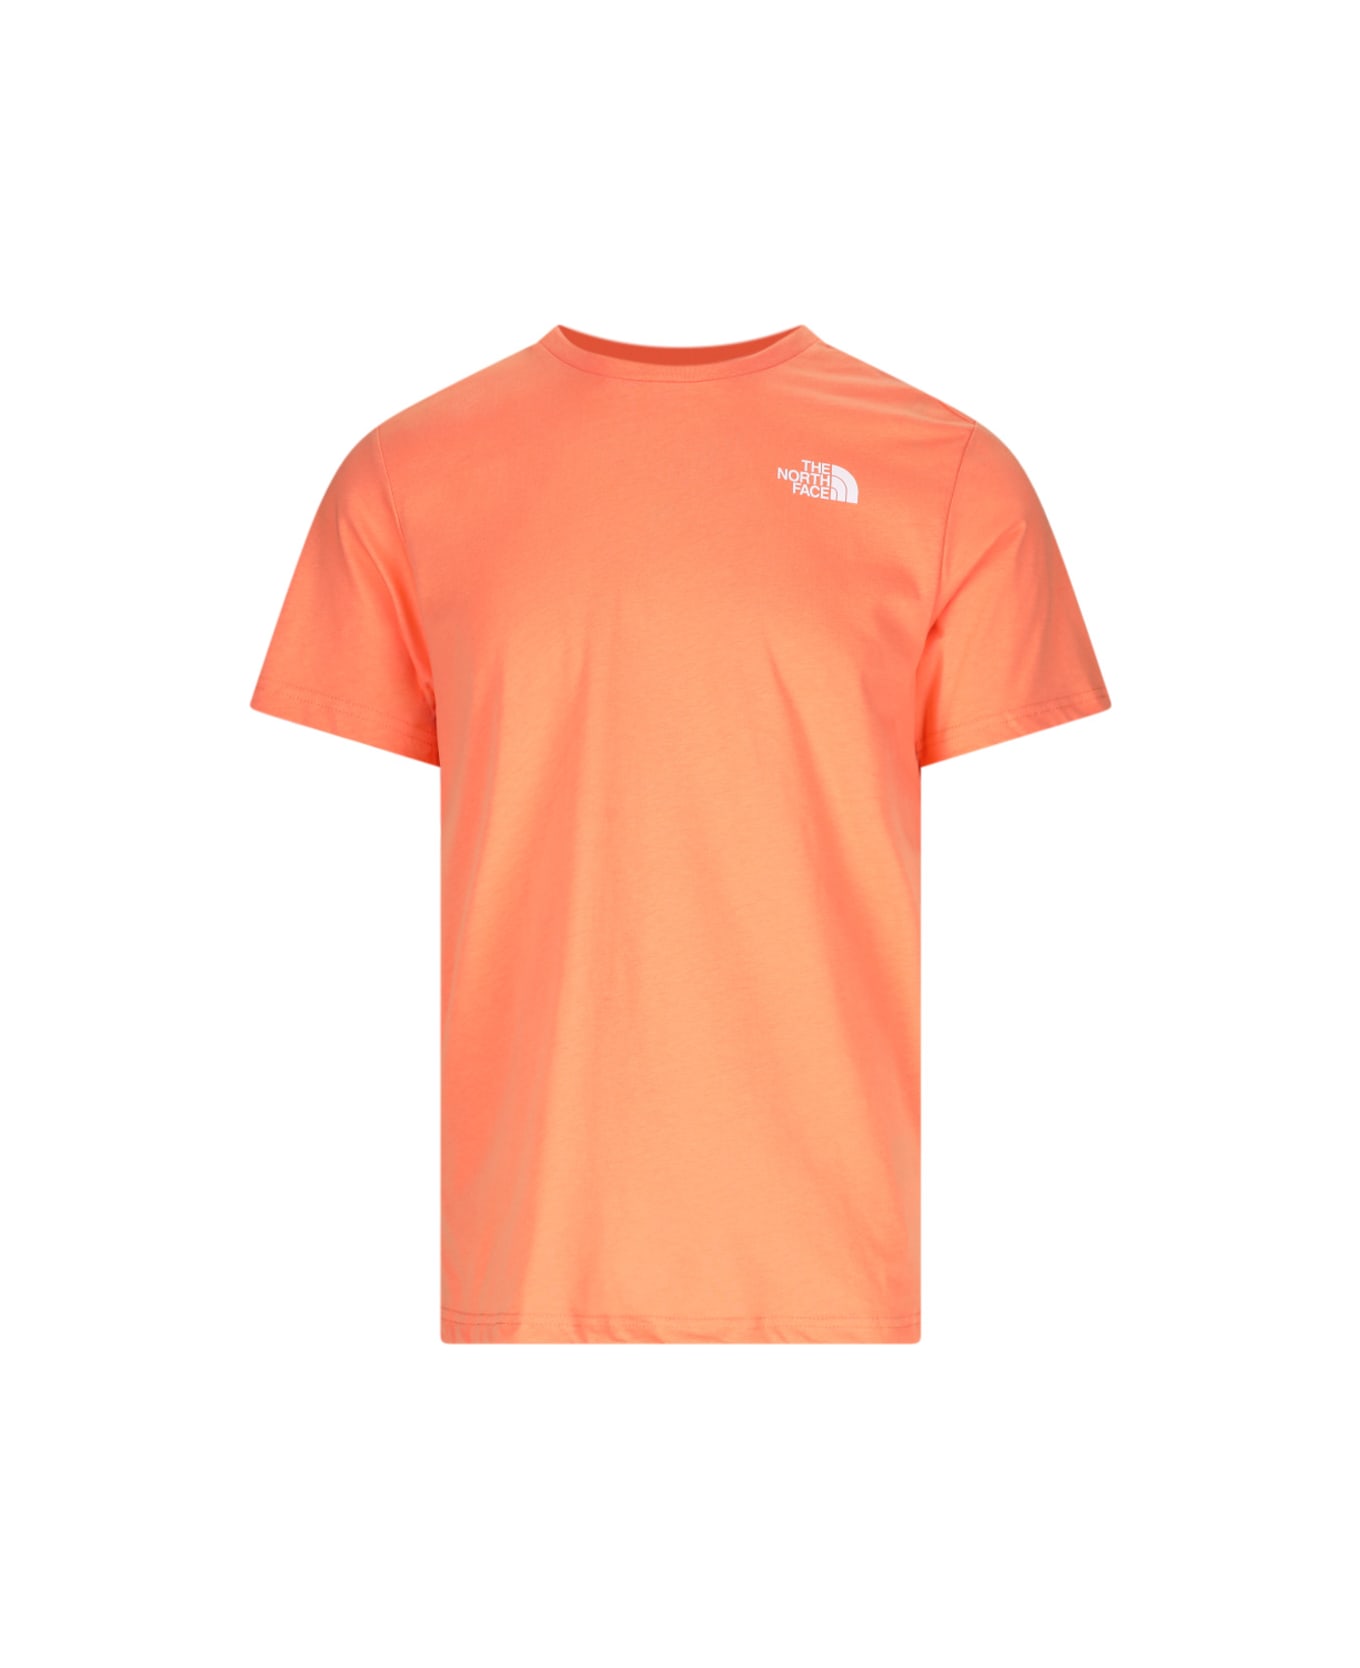 The North Face Logo T-shirt - Orange シャツ